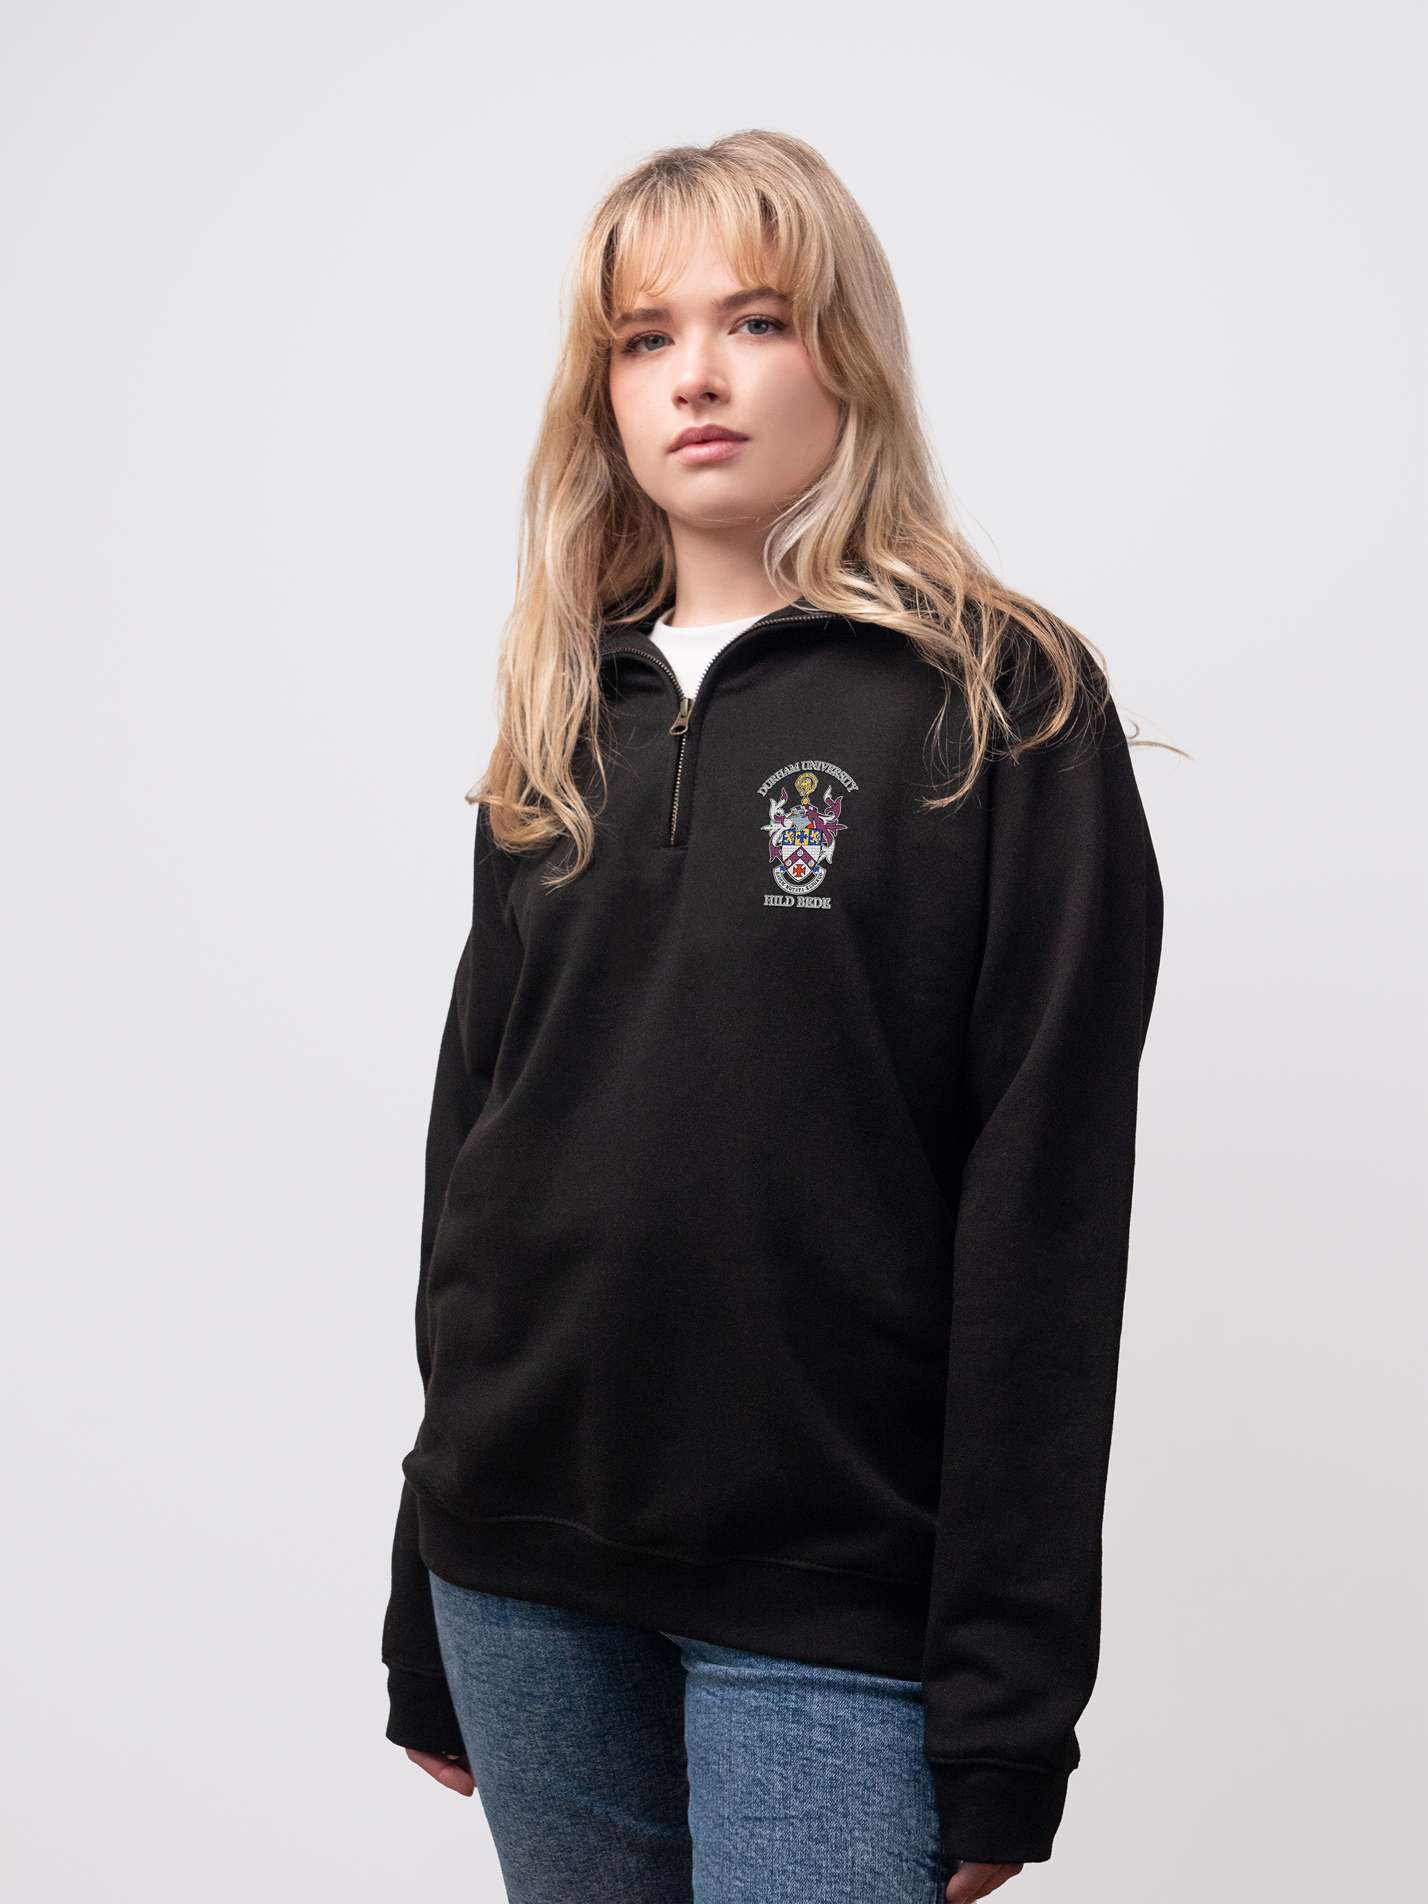 St Hild and St Bede student wearing a black 1/4 zip sweatshirt 